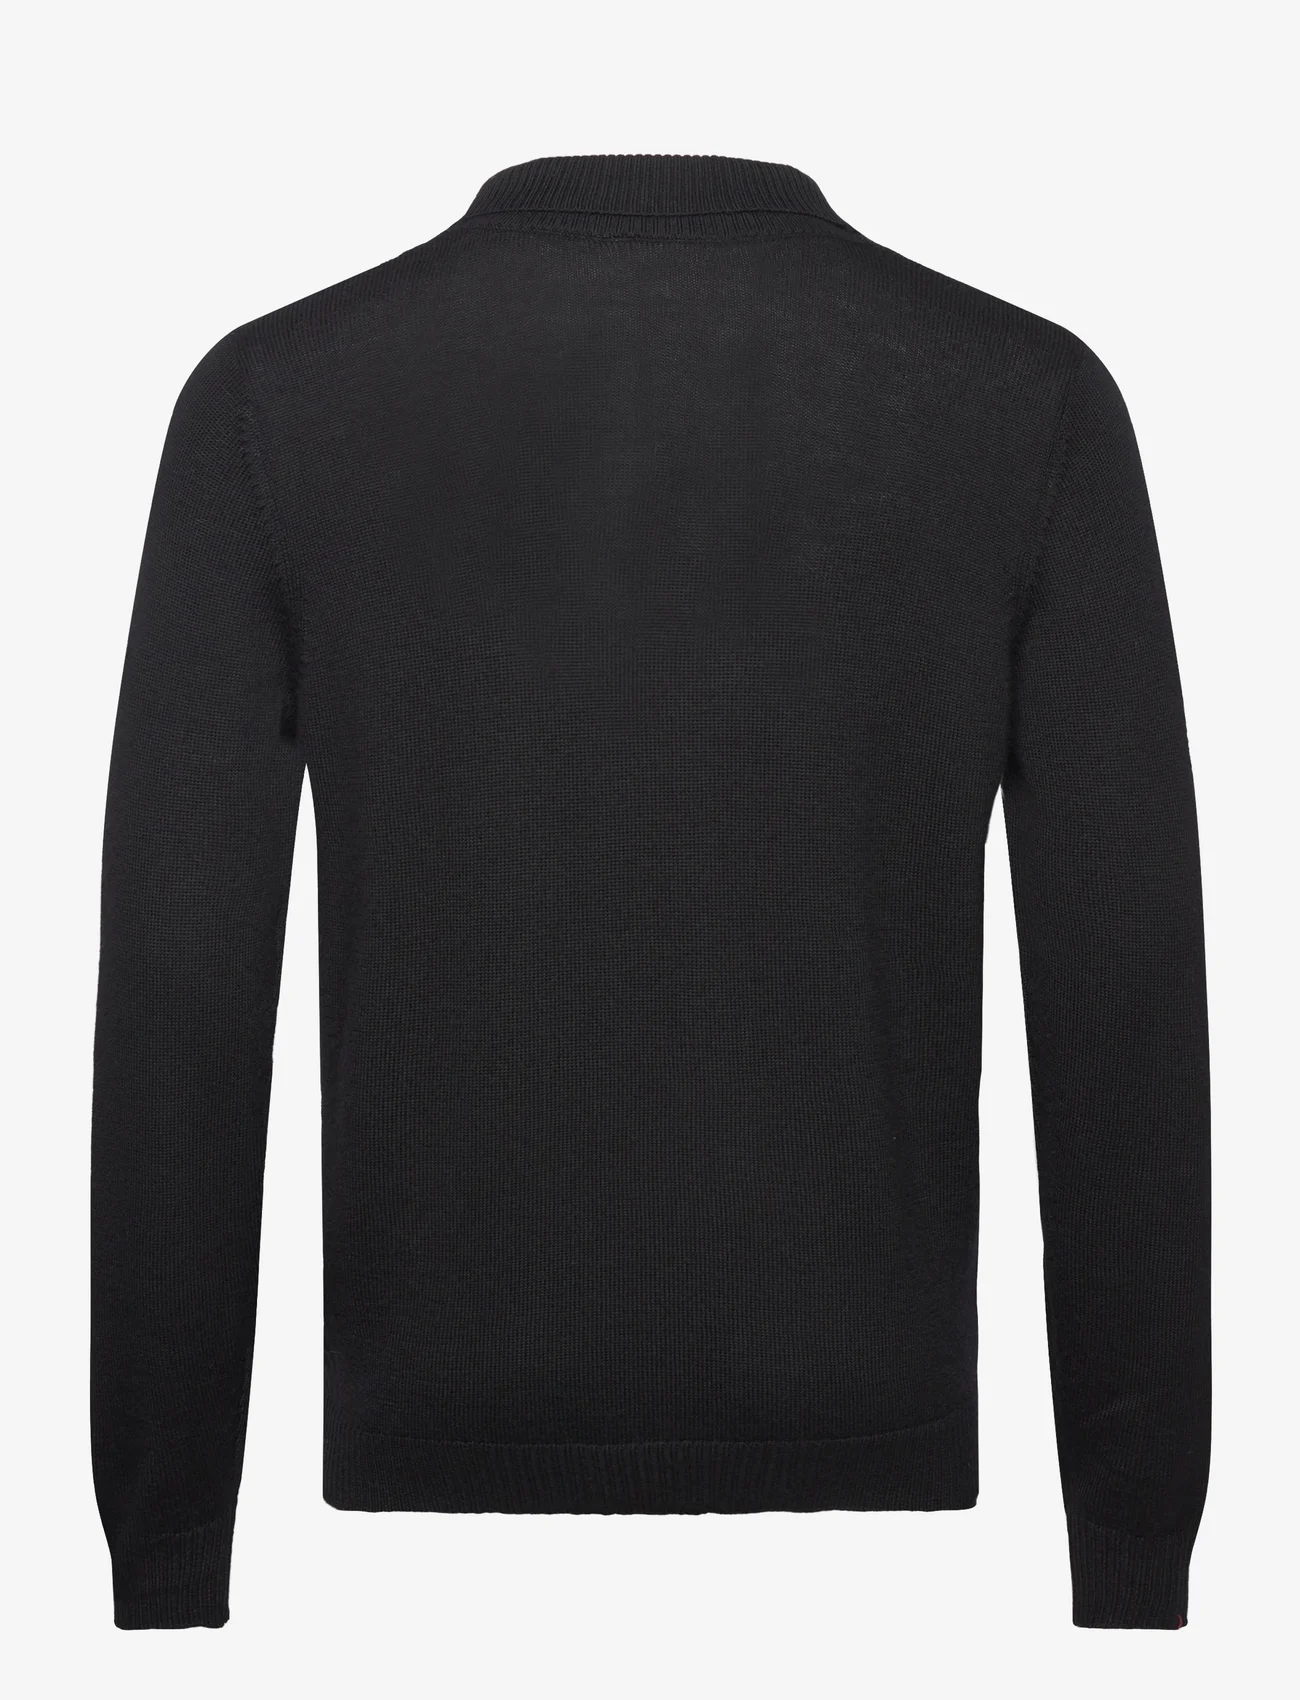 Bruun & Stengade - BS Nohr Regular Fit Knitwear - koftor - black - 1